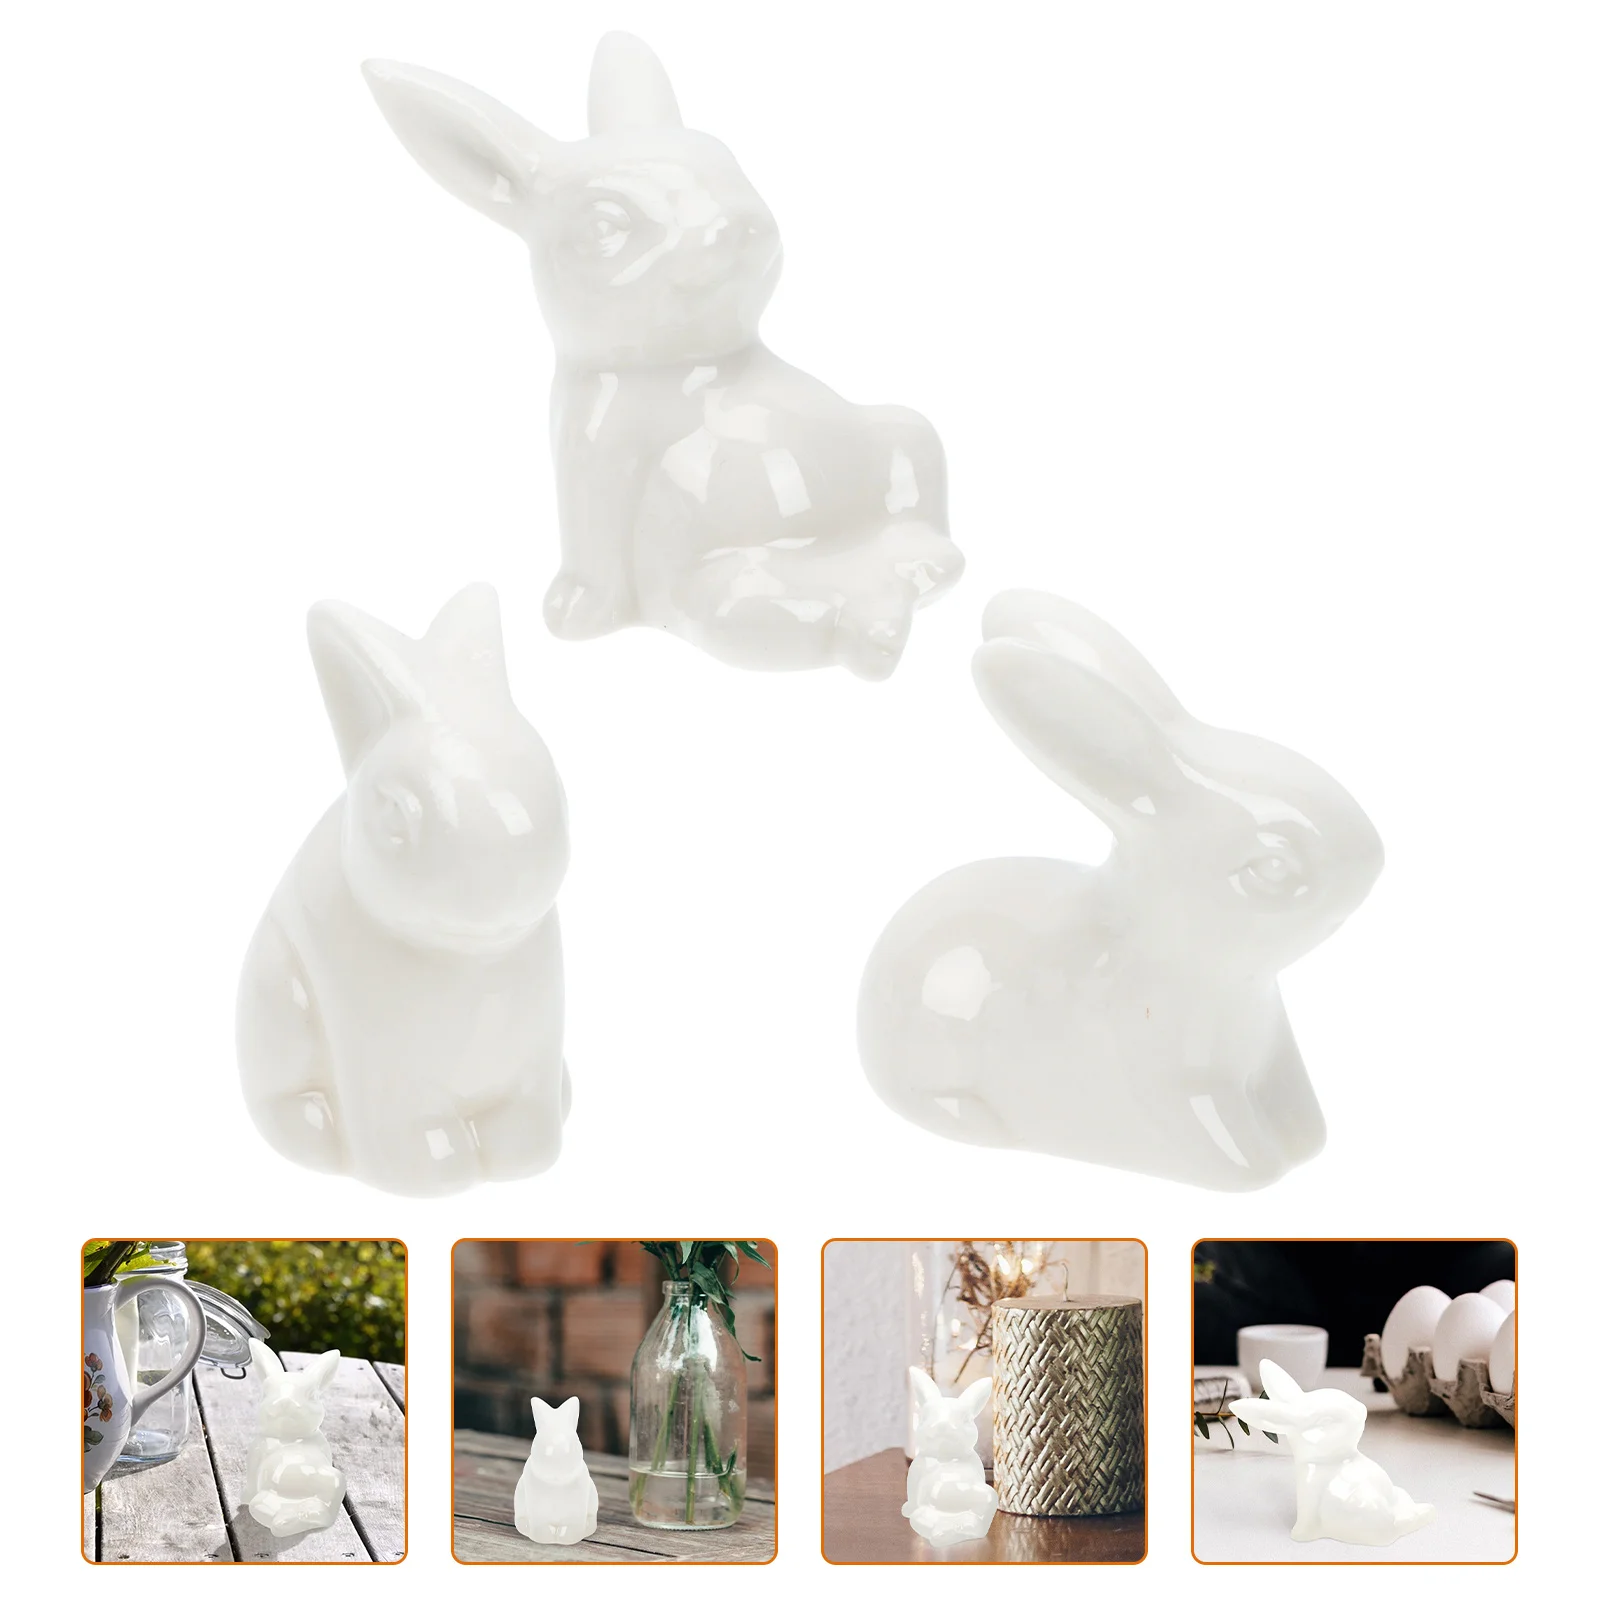 

Bunny Rabbit Ceramic Easter Figurine Figurines Miniature Statue White Figure Sculpture Porcelain Ornament Animal Mini Rabbits